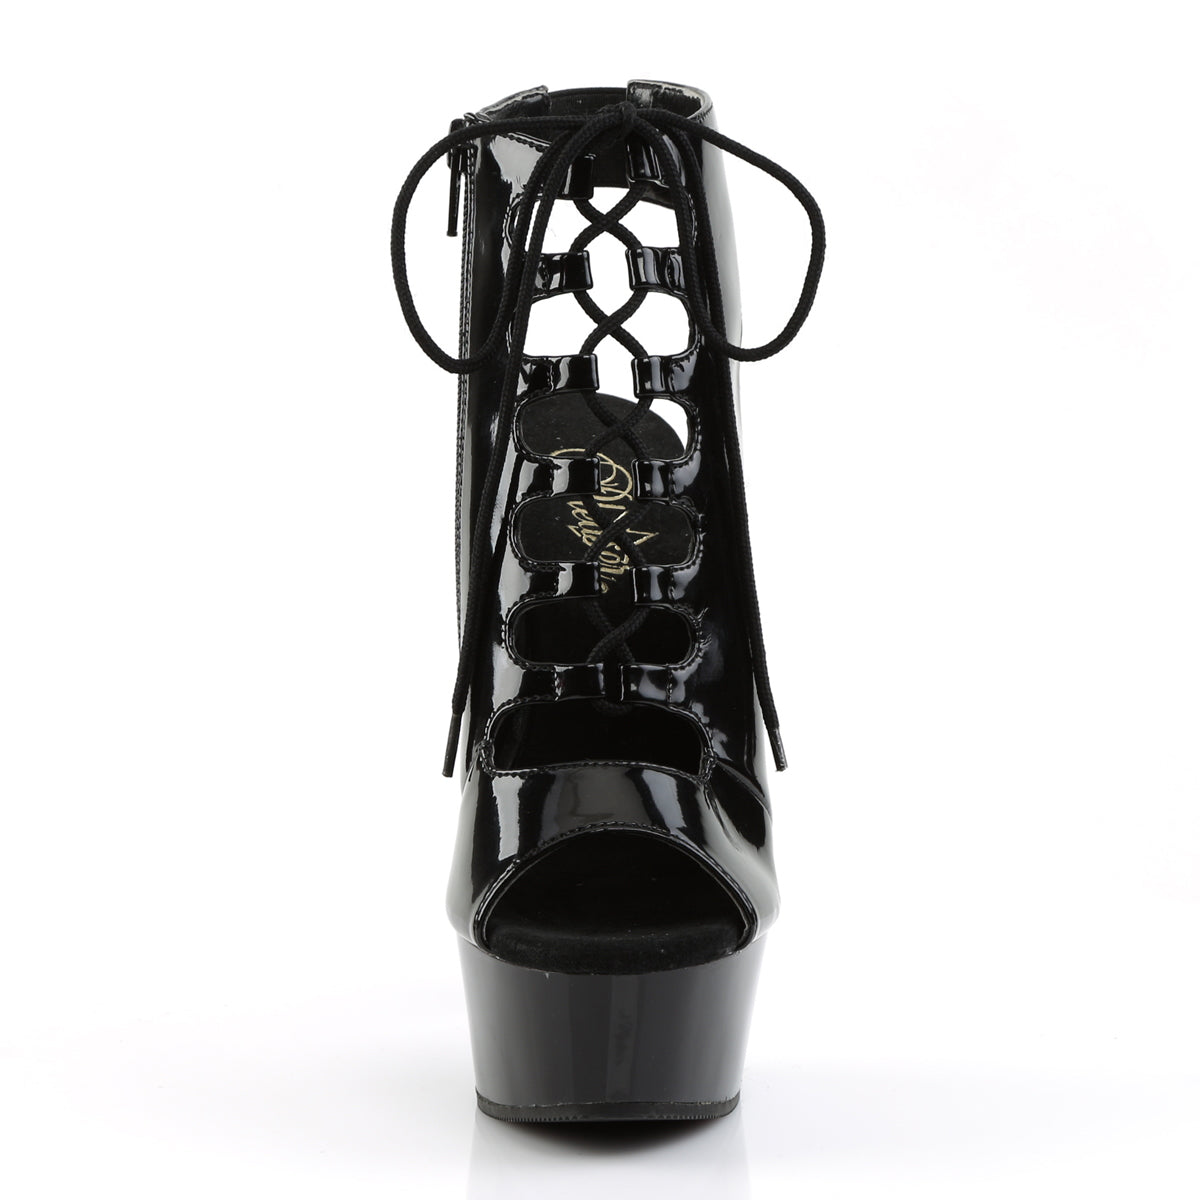 DELIGHT-600-20 Black Ankle Boot Pleaser